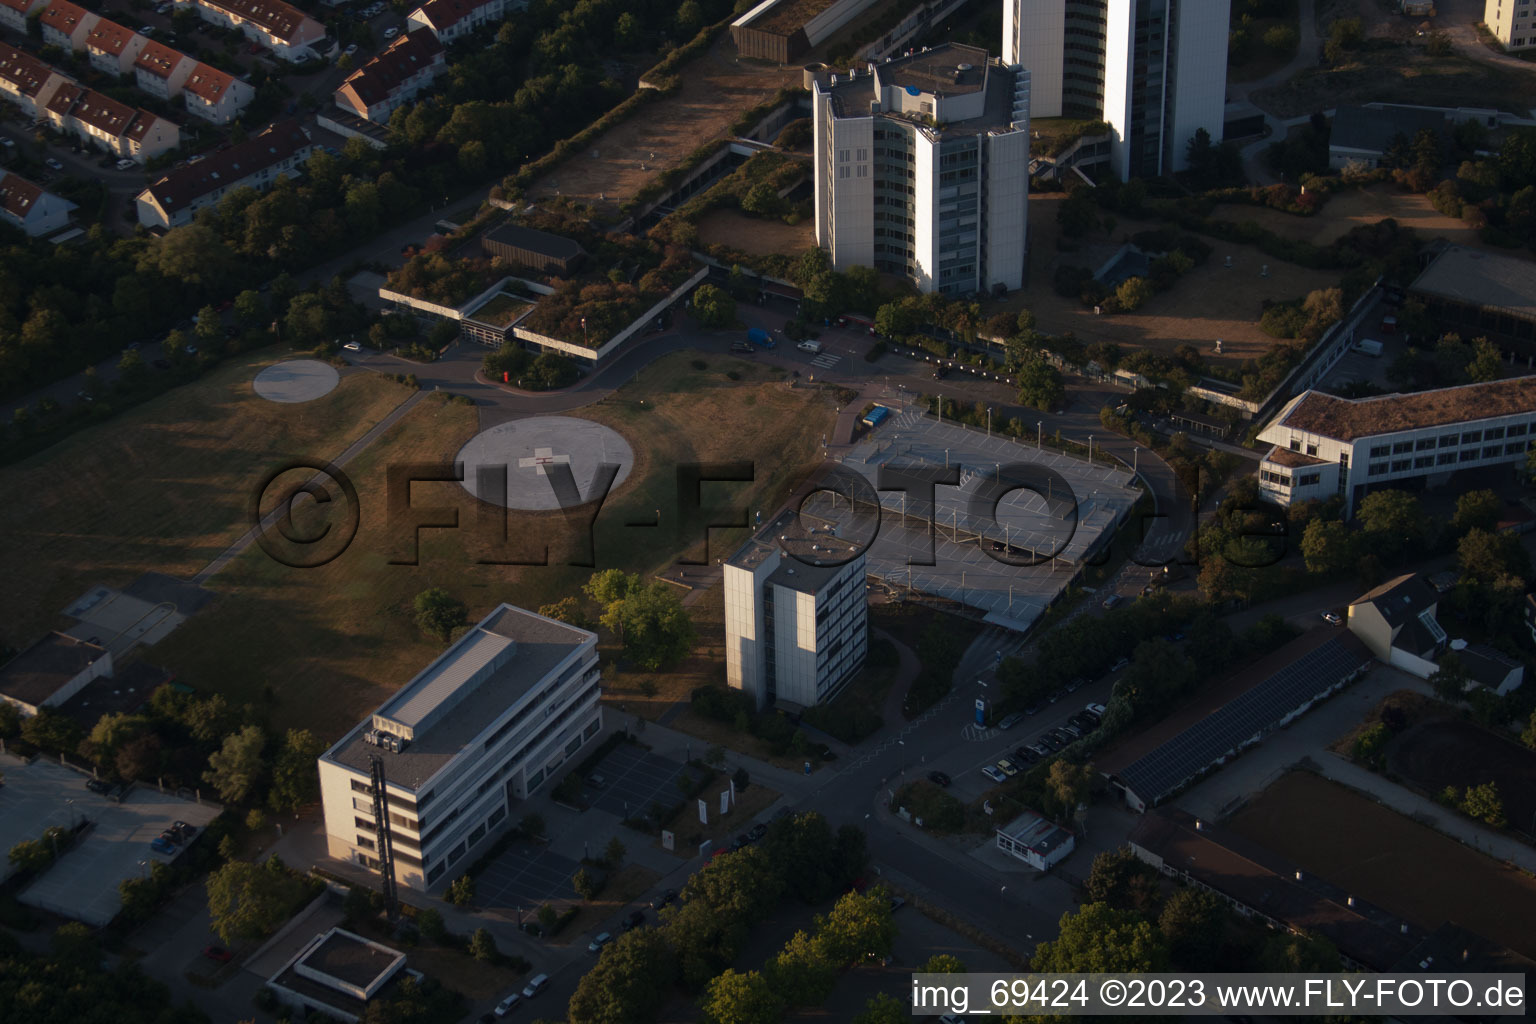 Quartier Oggersheim in Ludwigshafen am Rhein dans le département Rhénanie-Palatinat, Allemagne vu d'un drone